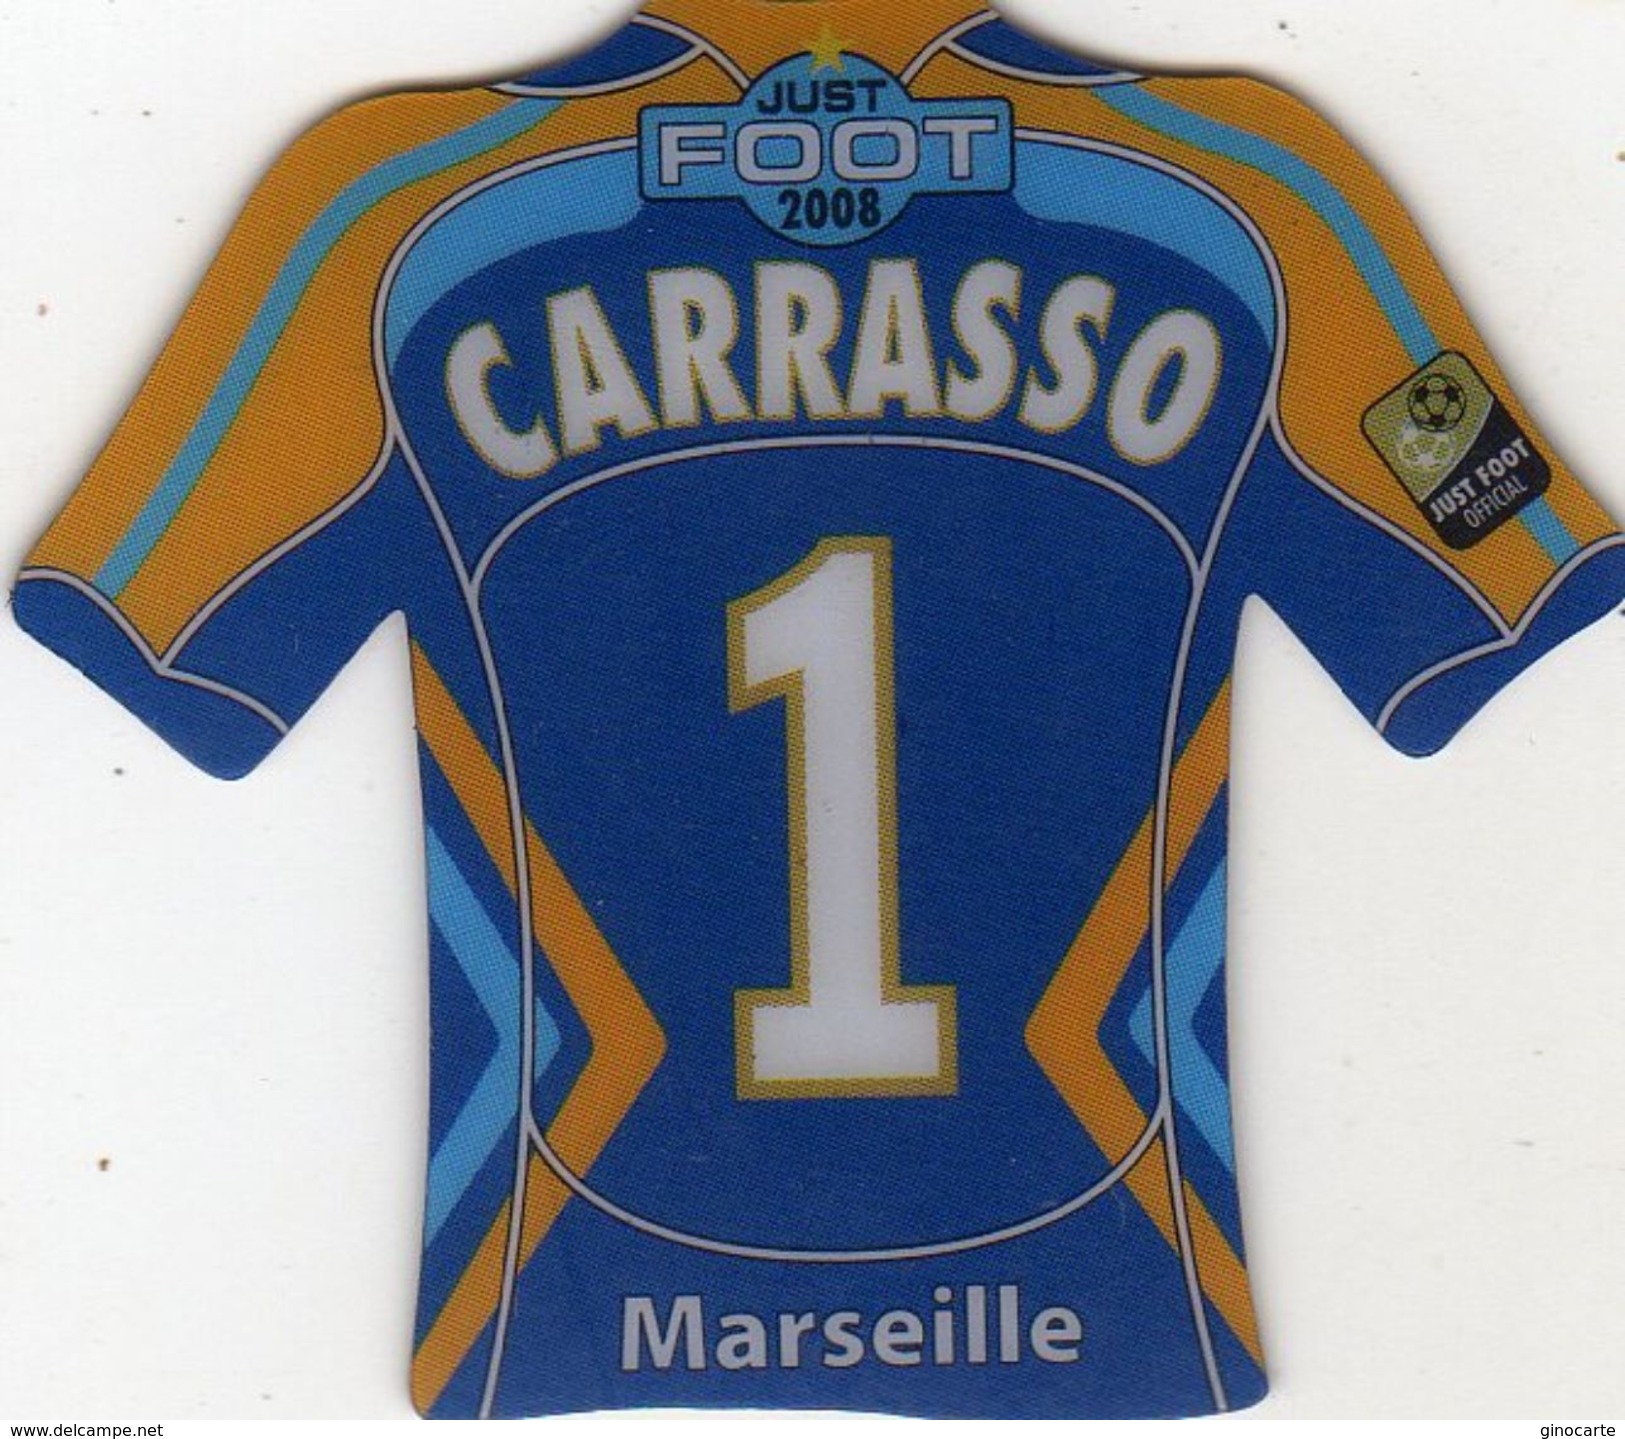 Magnet Magnets Maillot De Football Pitch Marseille Carrasso 2008 - Sport